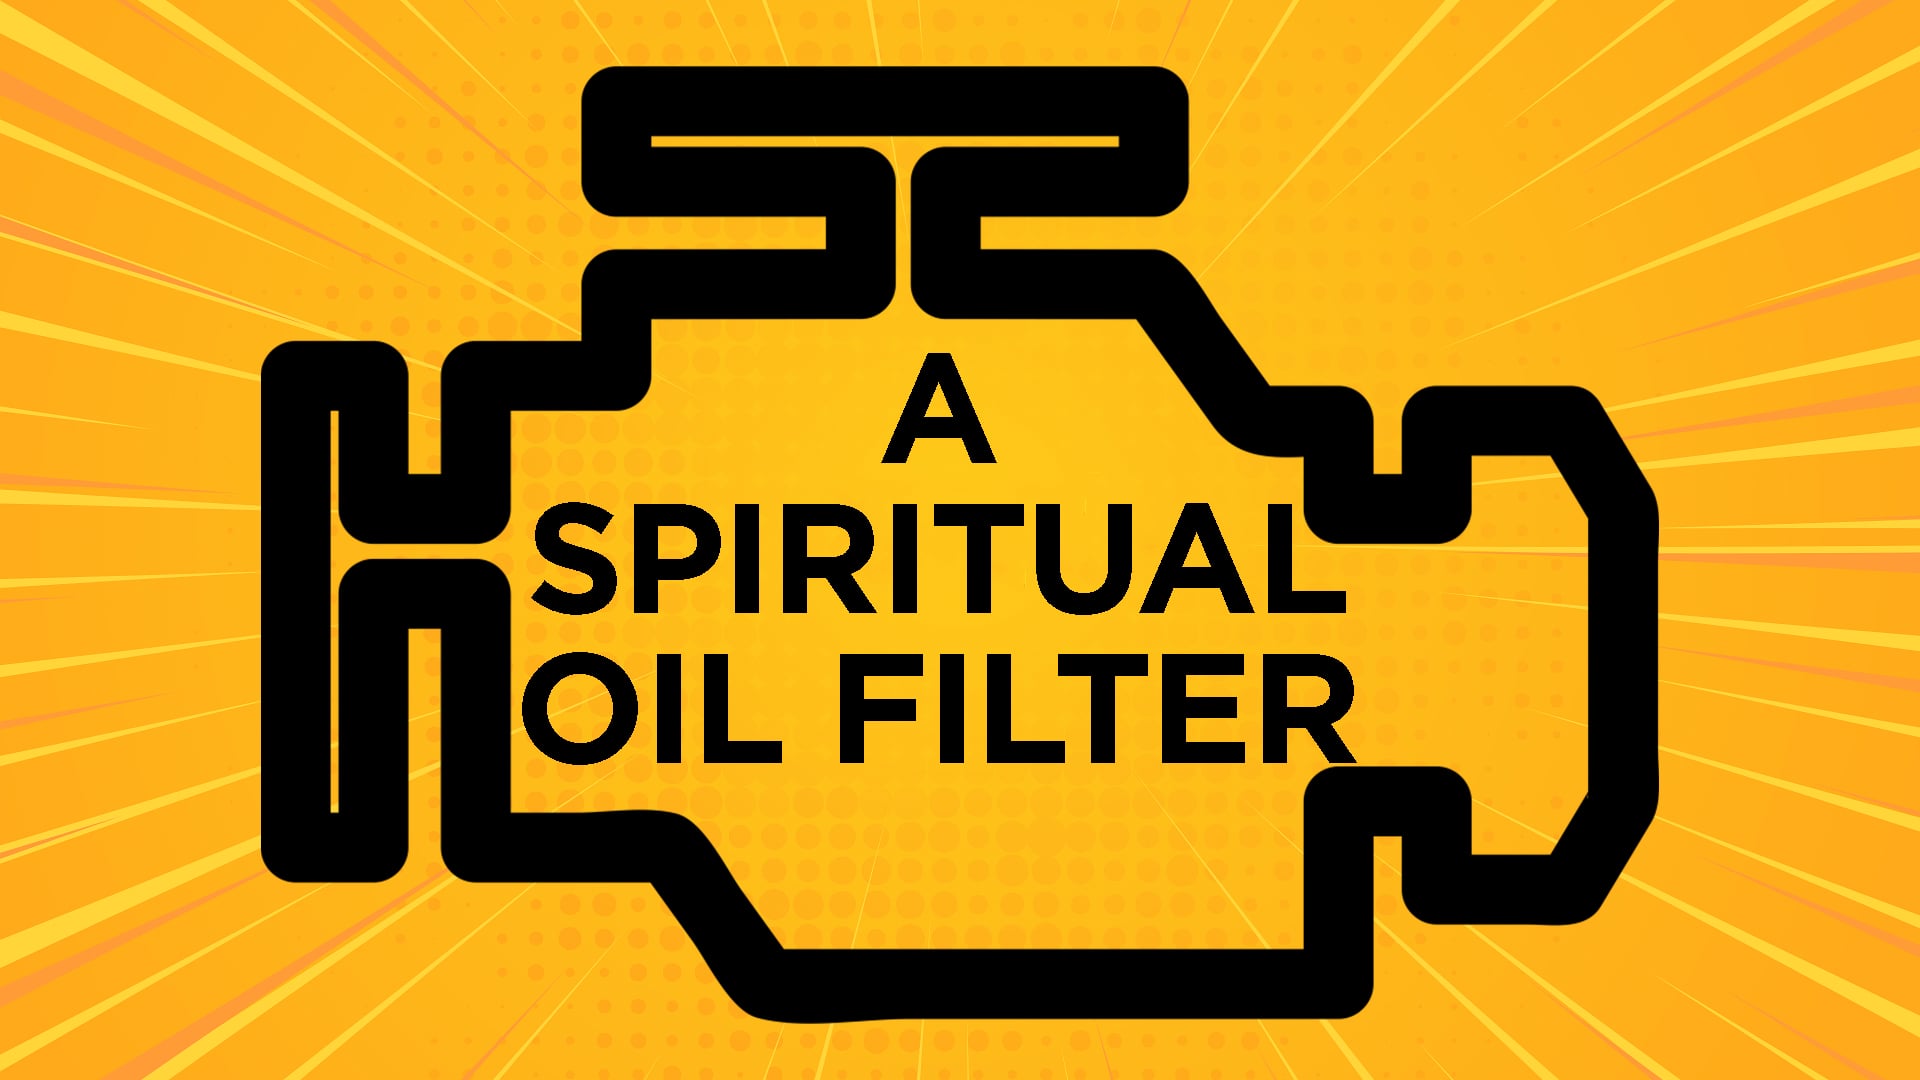 A Spiritual Oil Filter